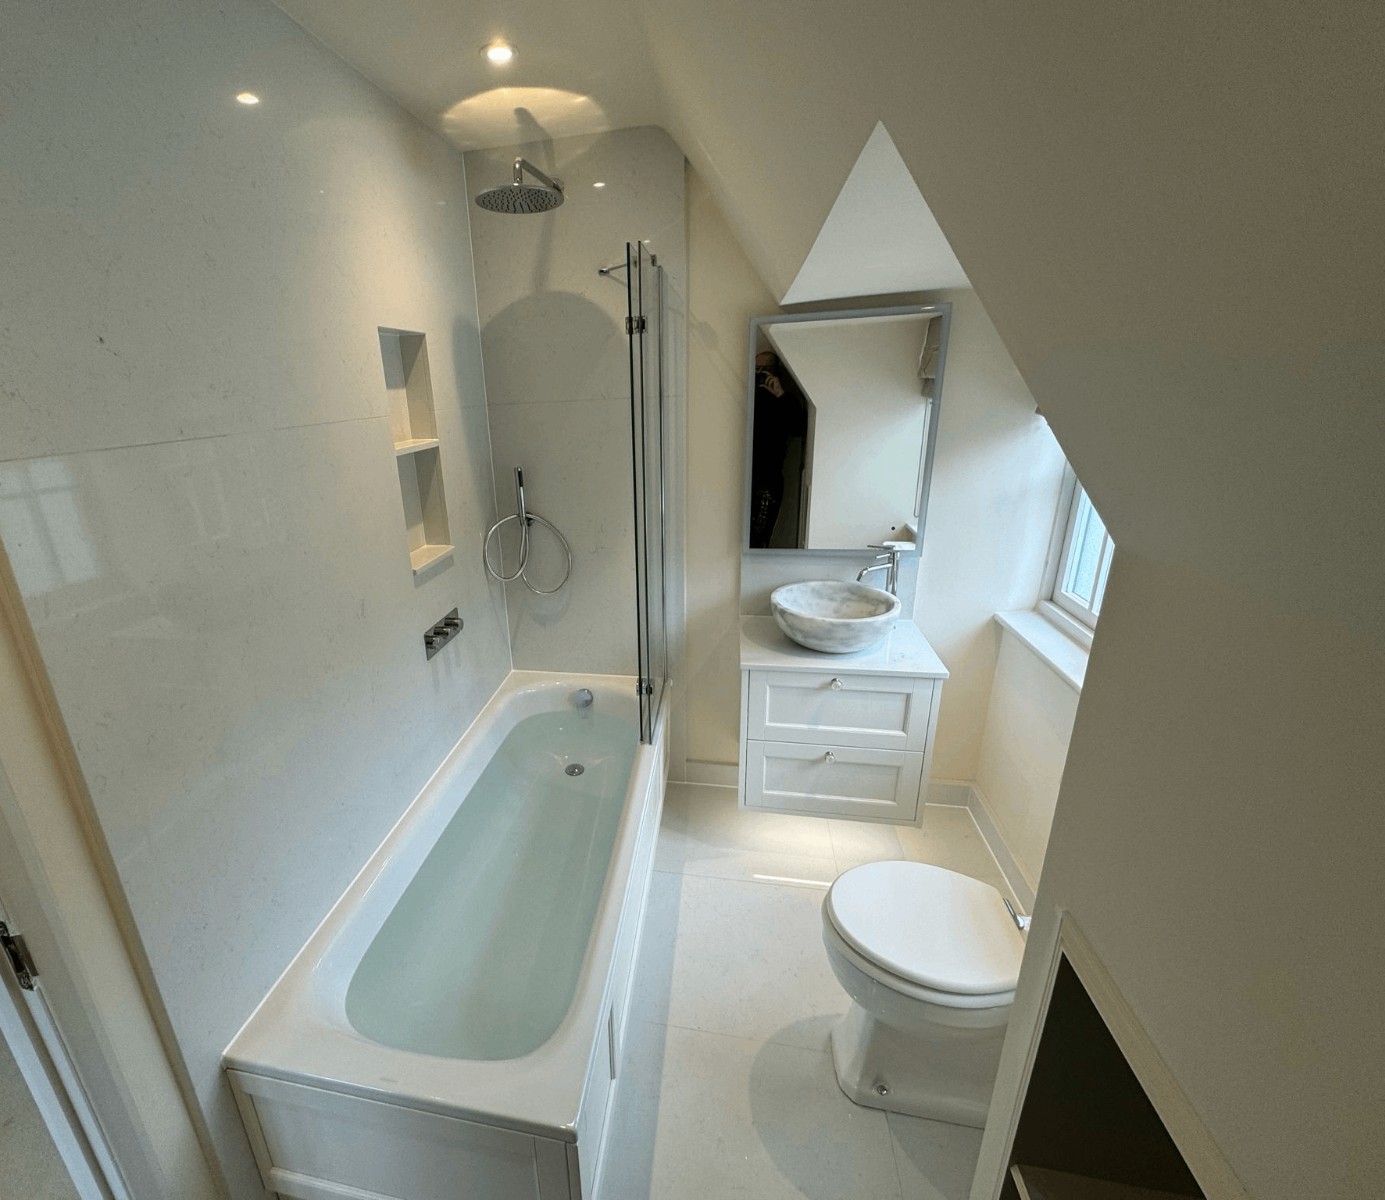 A white quartz bathroom installed by SMG